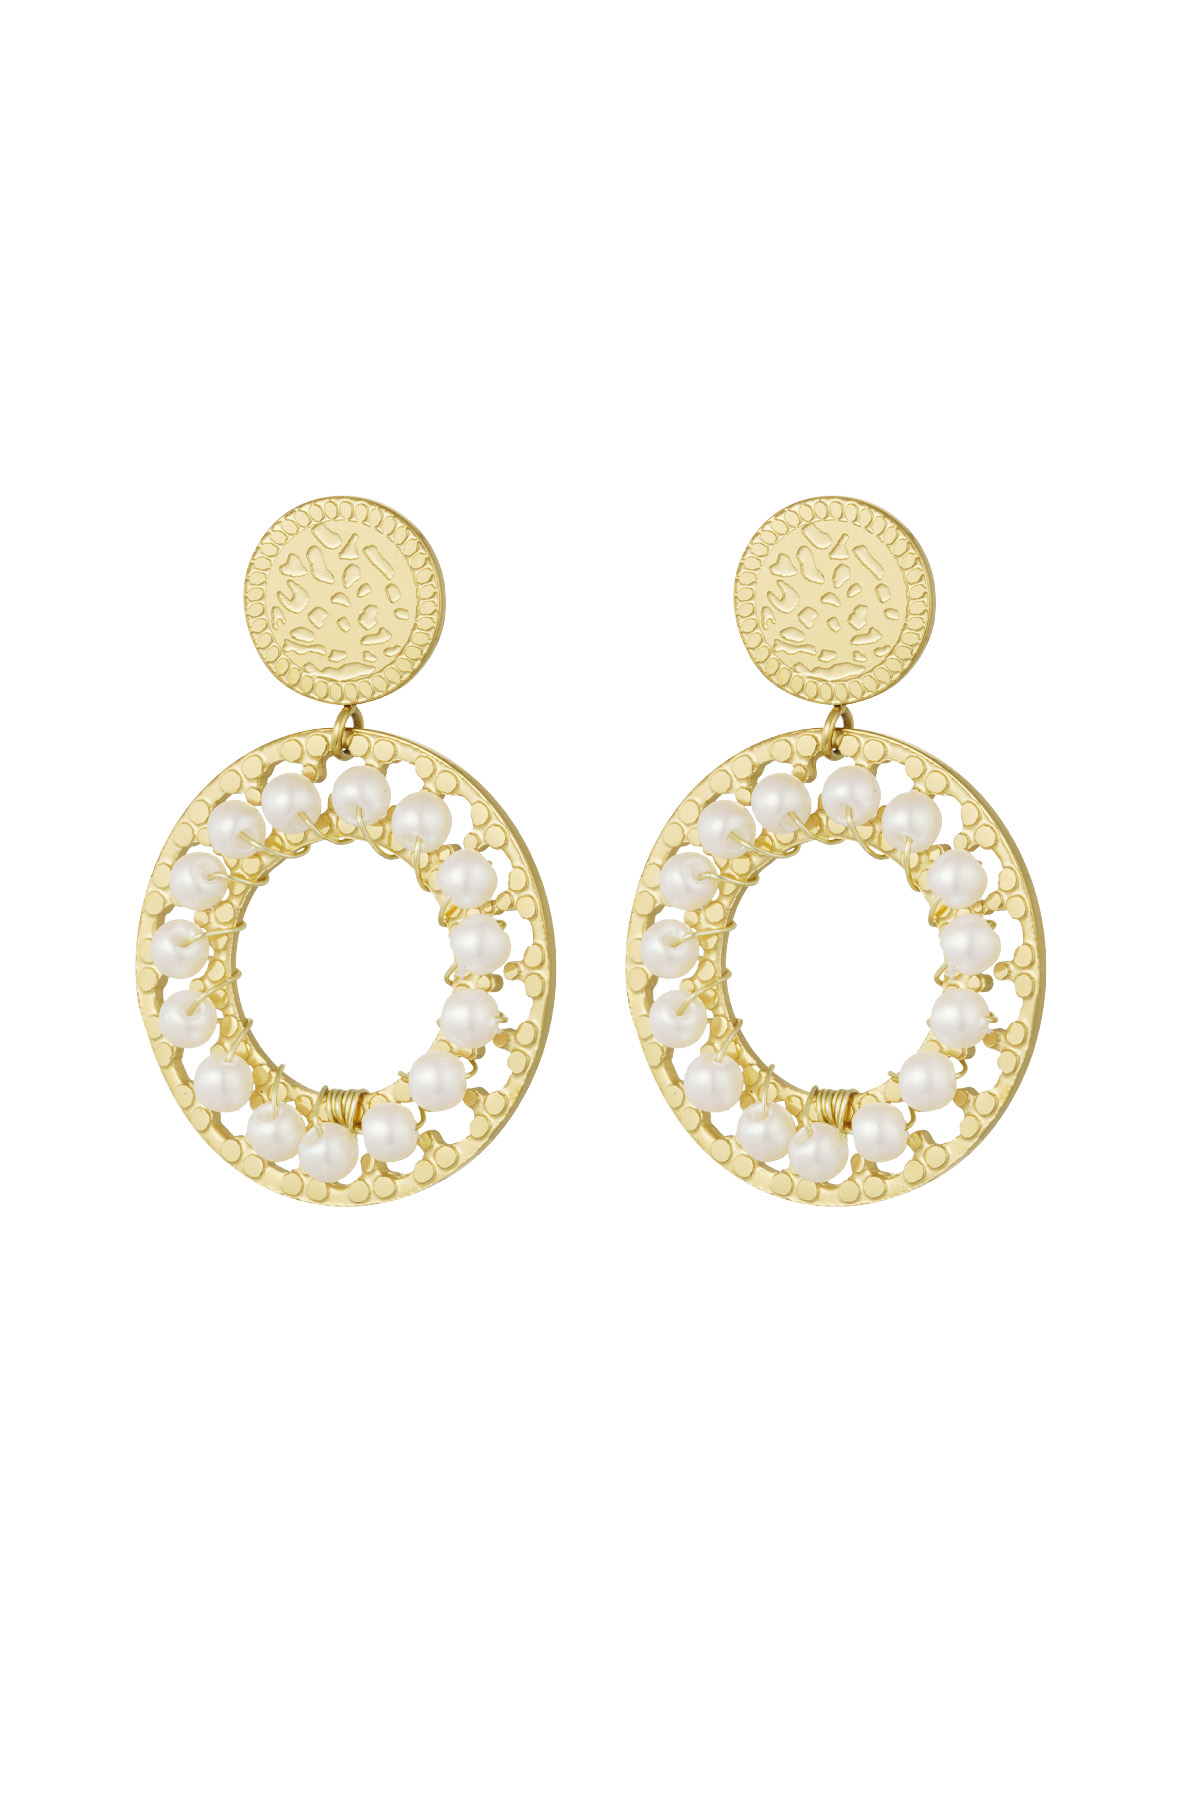 Doppelkreis-Ohrringe mit Perlen – Gold